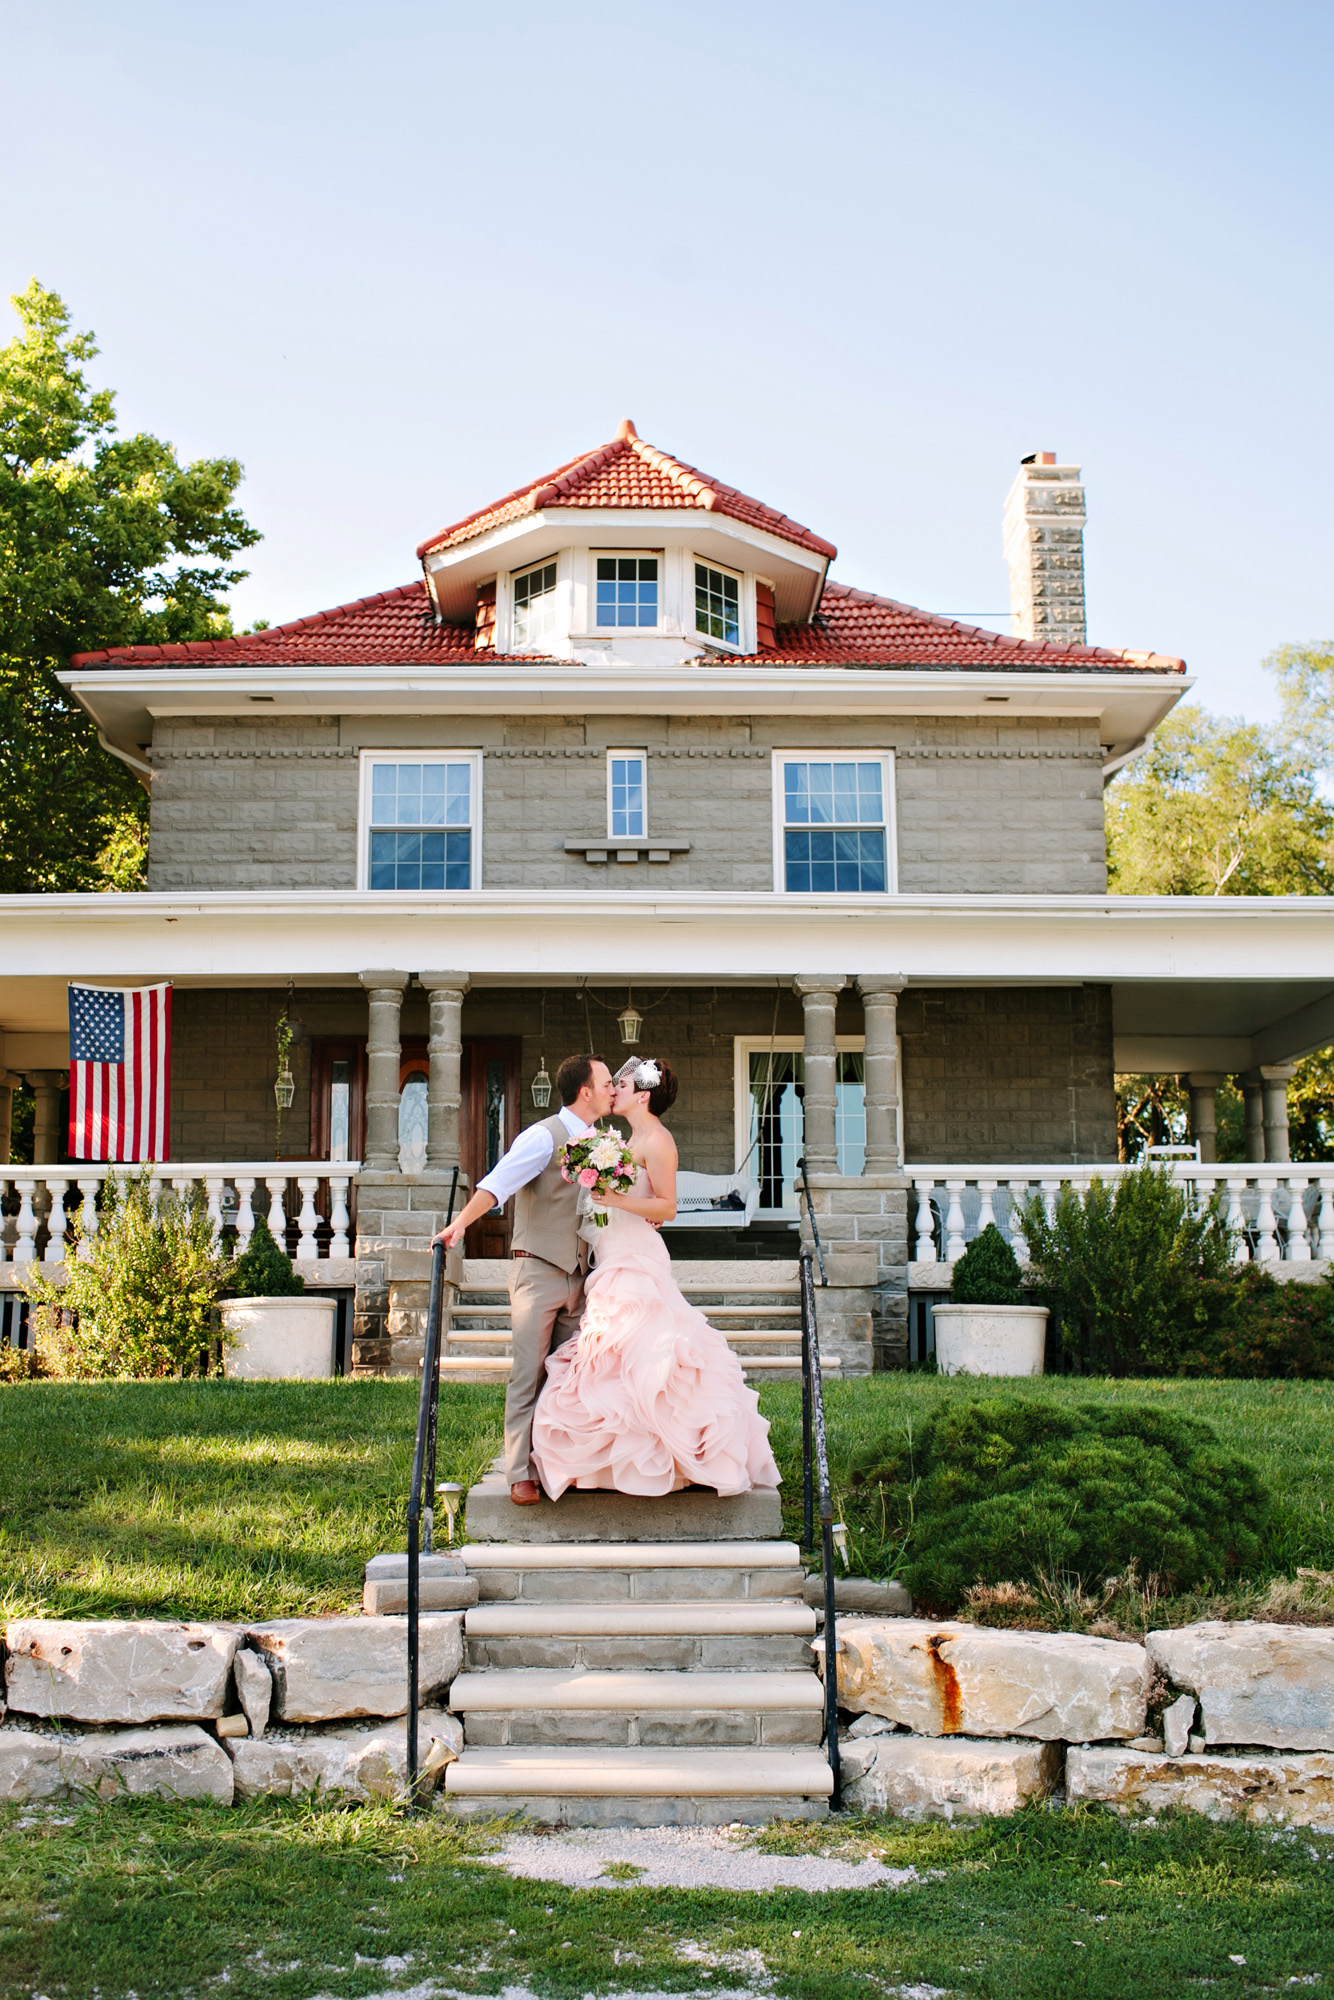 Allison Garrett Johnson: Wedding, Family and Senior Photographer 222 S Columbia Ave, Seward Nebraska 68434